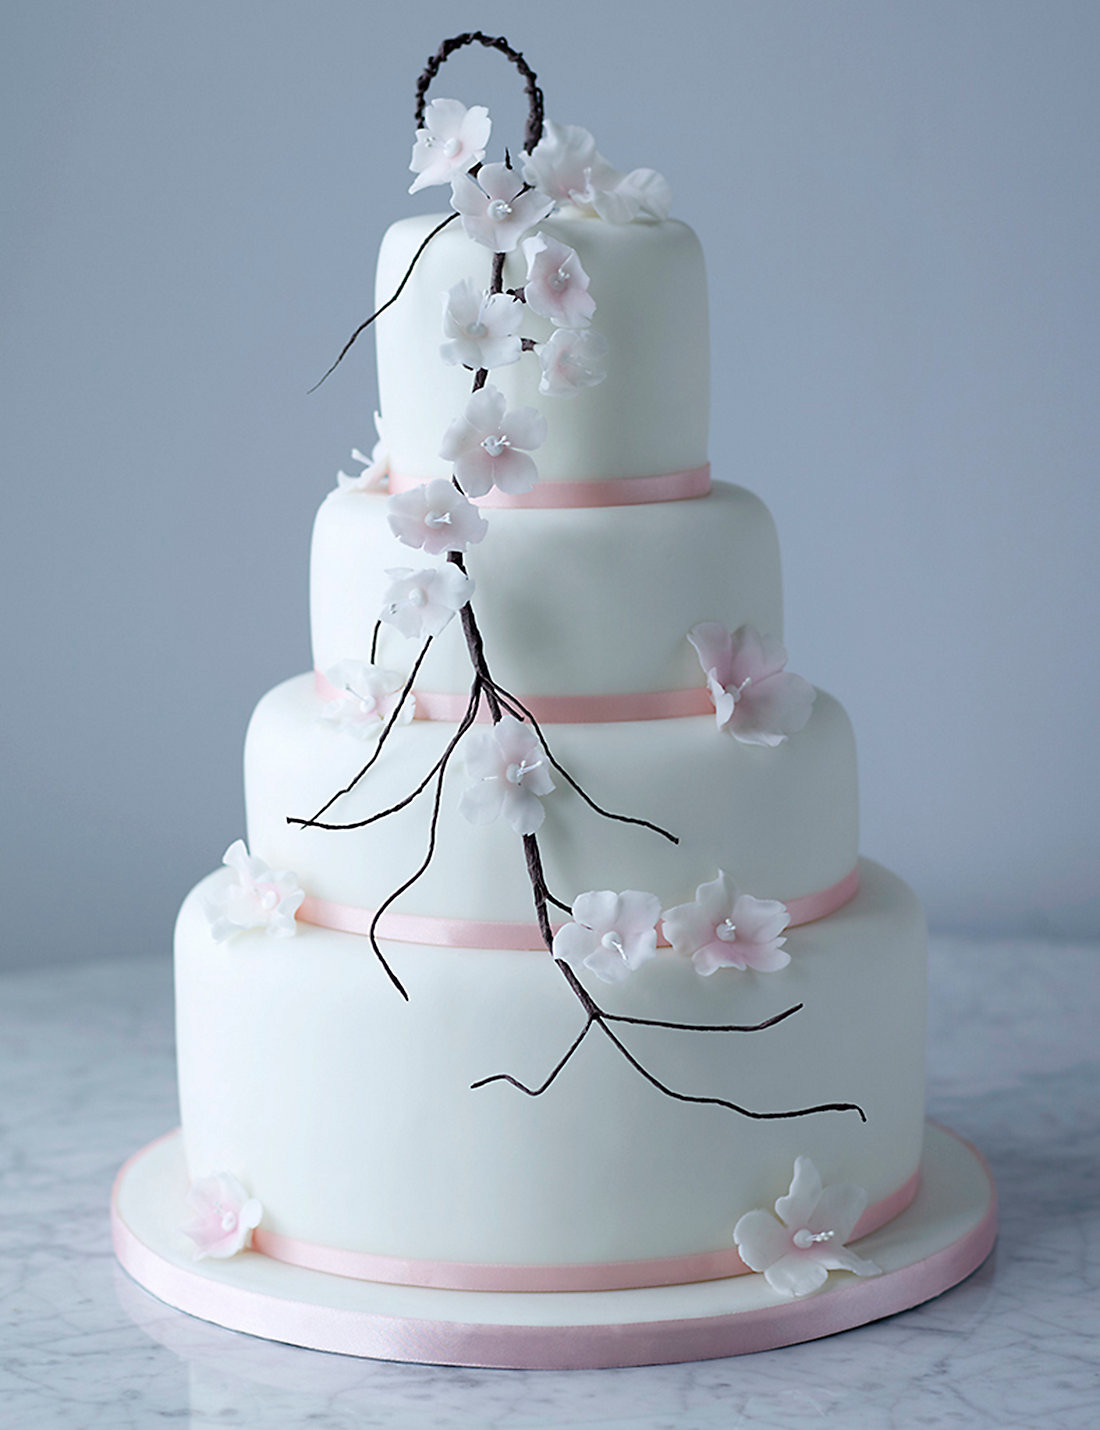 3 Tier Wedding Cakes Sizes
 3 tier wedding cake sizes idea in 2017